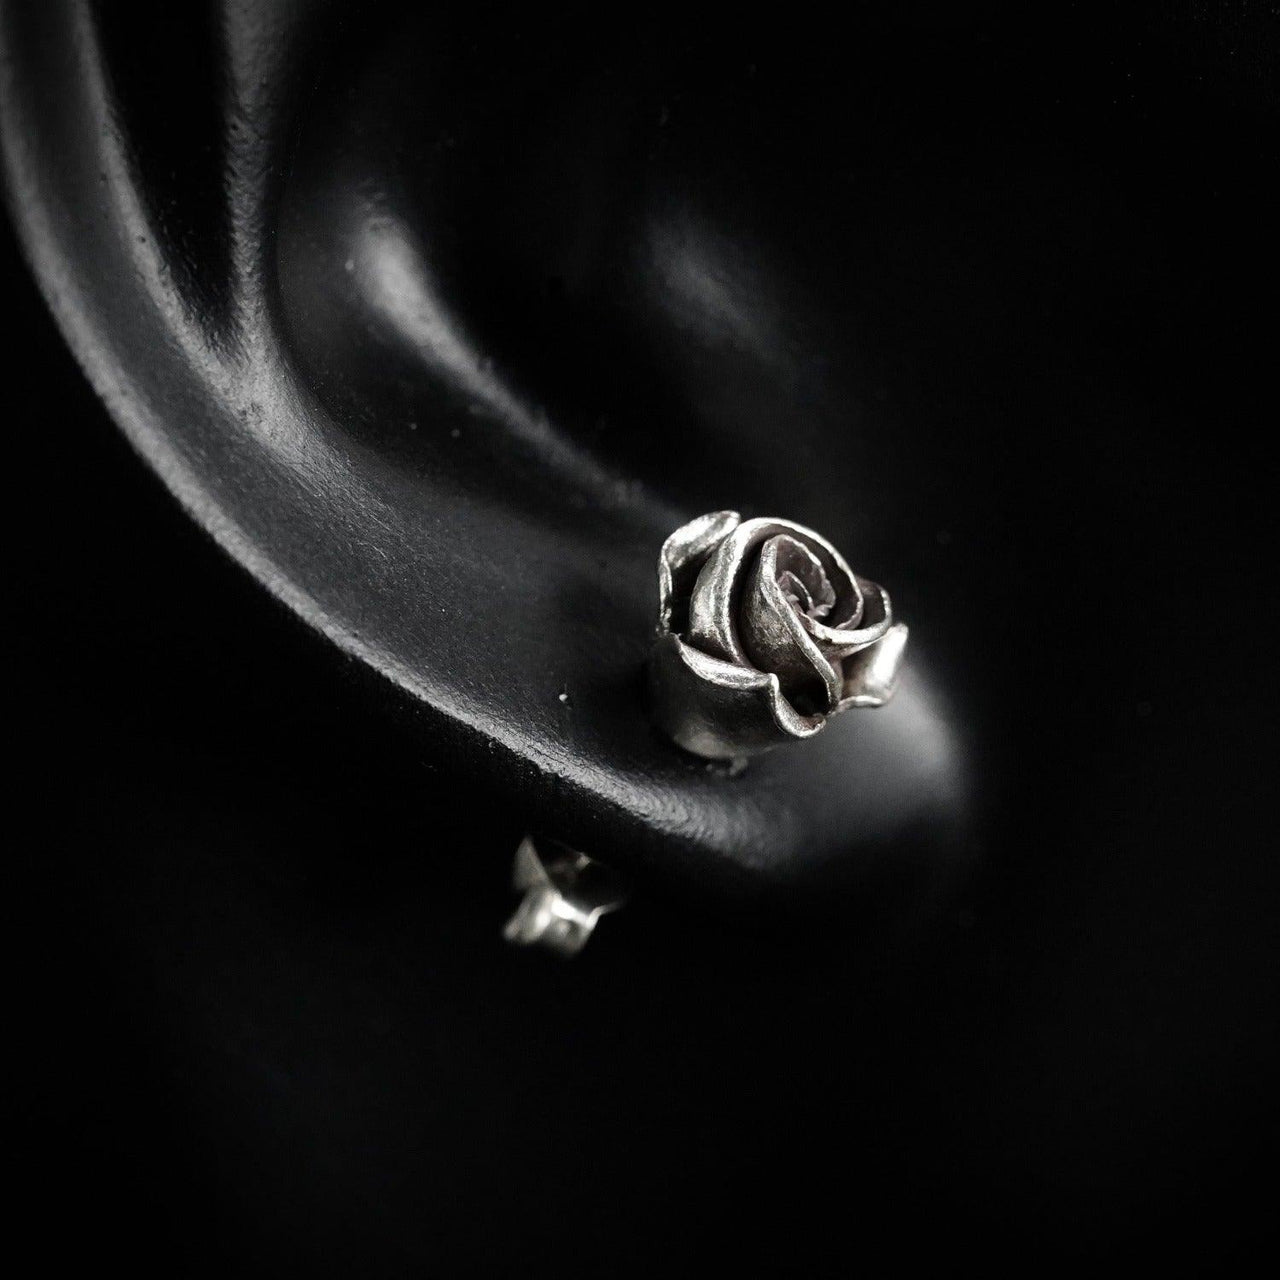 Model wearing sterling silver rose stud earrings by Black Feather Design